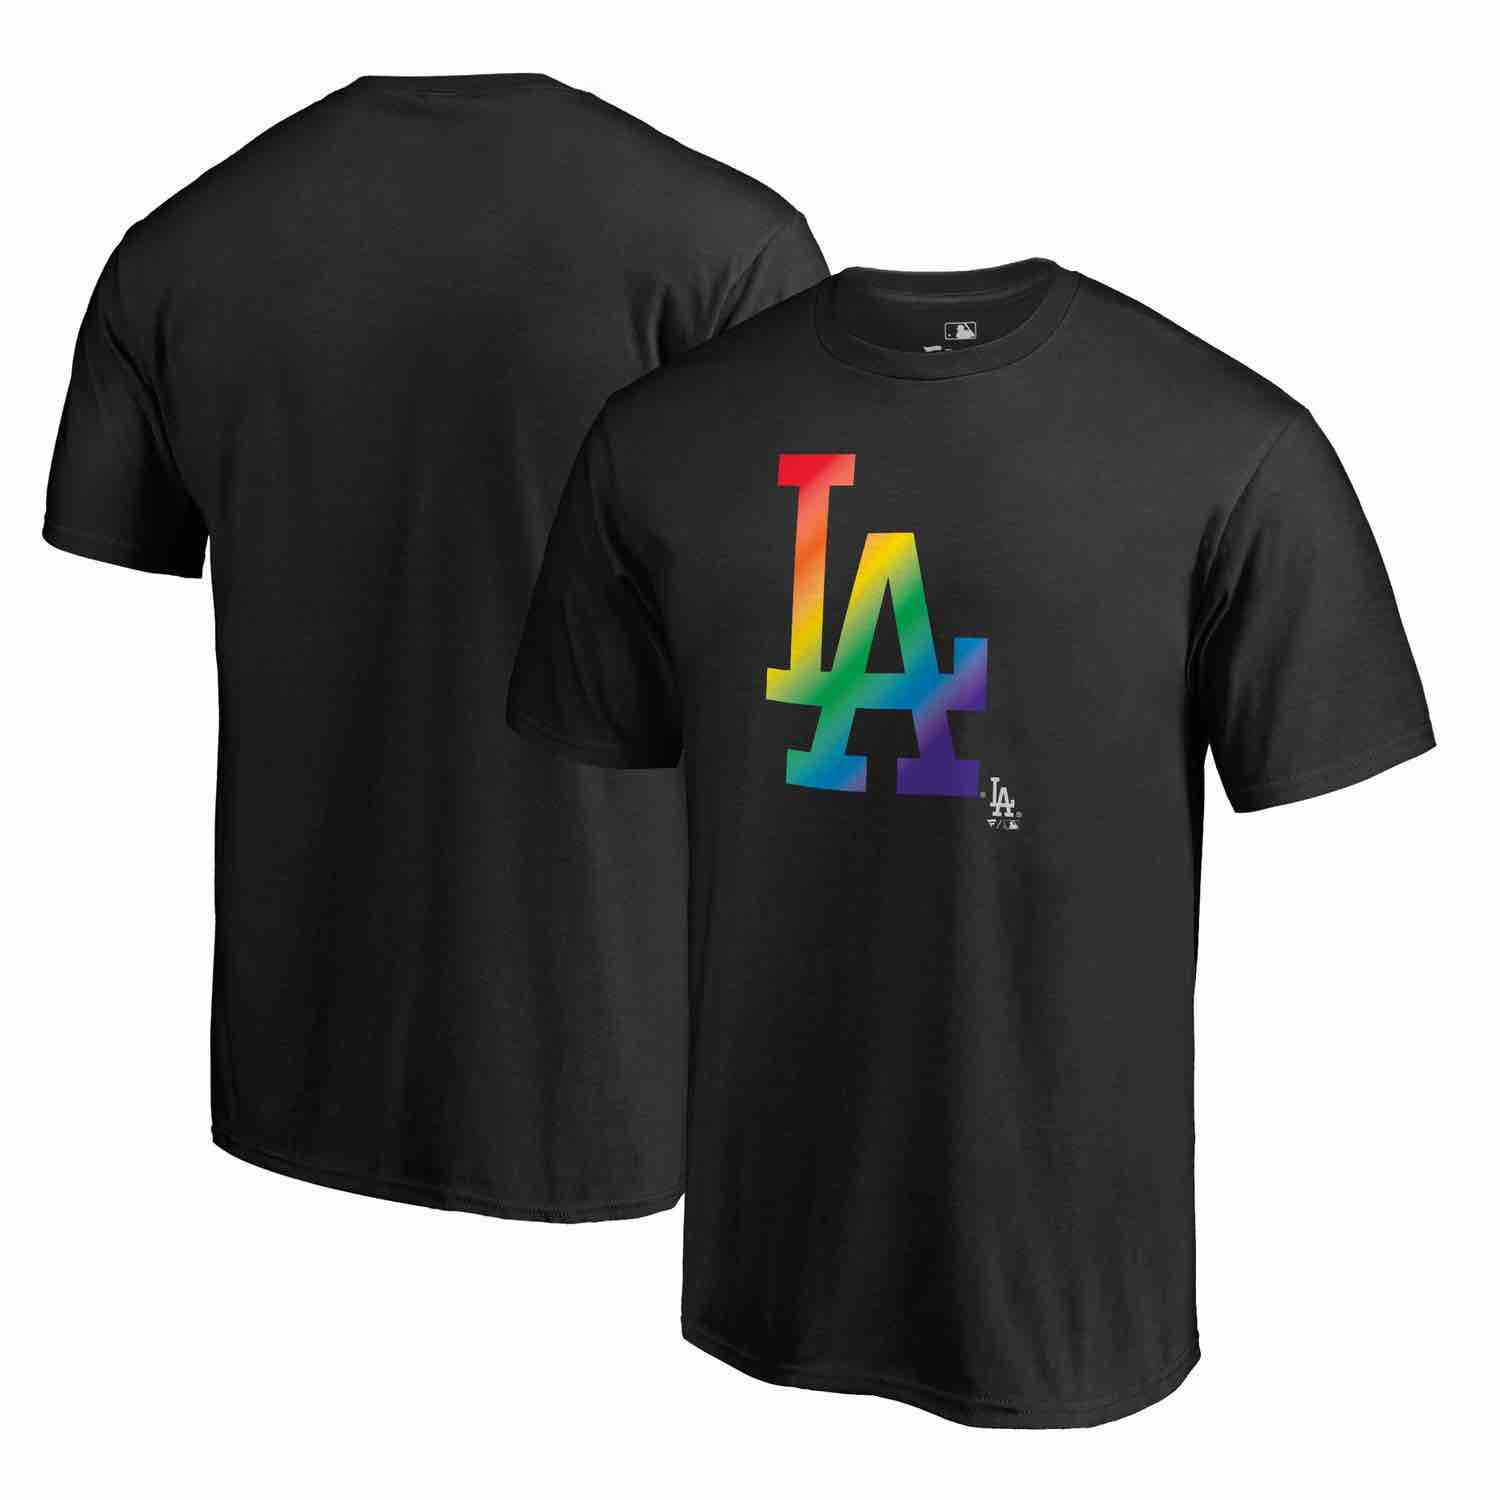 Mens Los Angeles Dodgers Fanatics Branded Pride Black T-Shirt